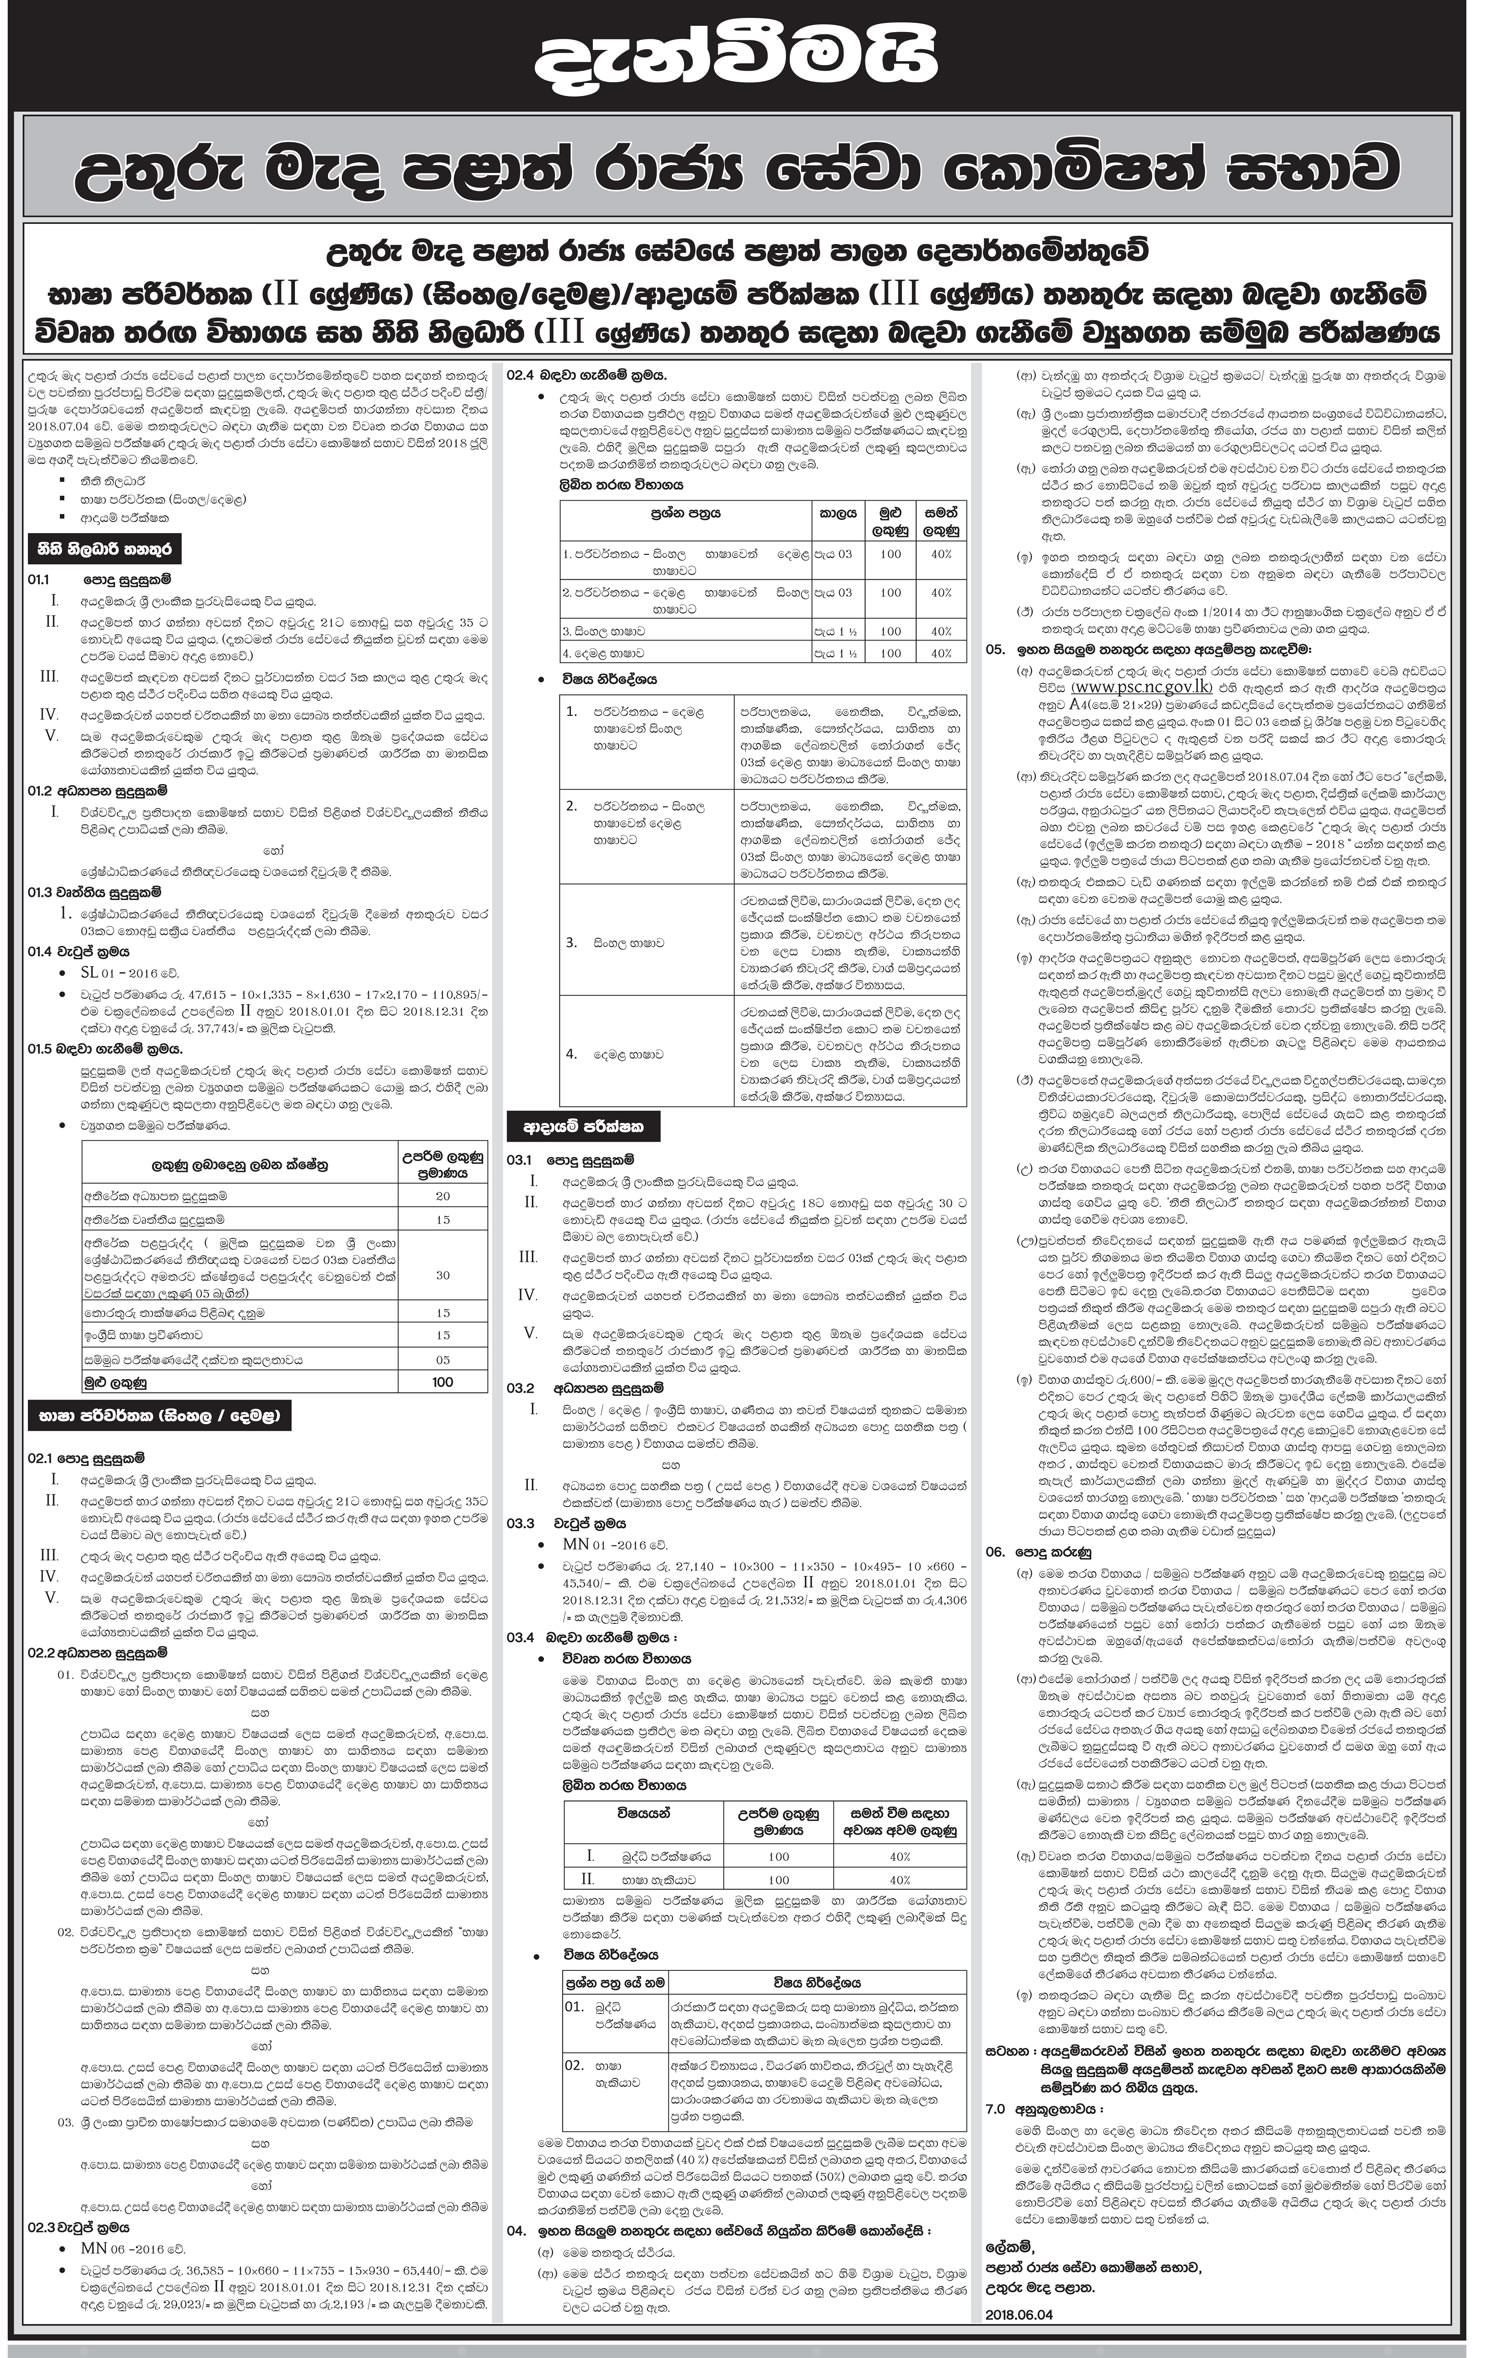 Legal Officer / Translator (Sinhala/Tamil) / Revenue Inspector - North Central Provincial Public Service Jobs Vacancies Application Form